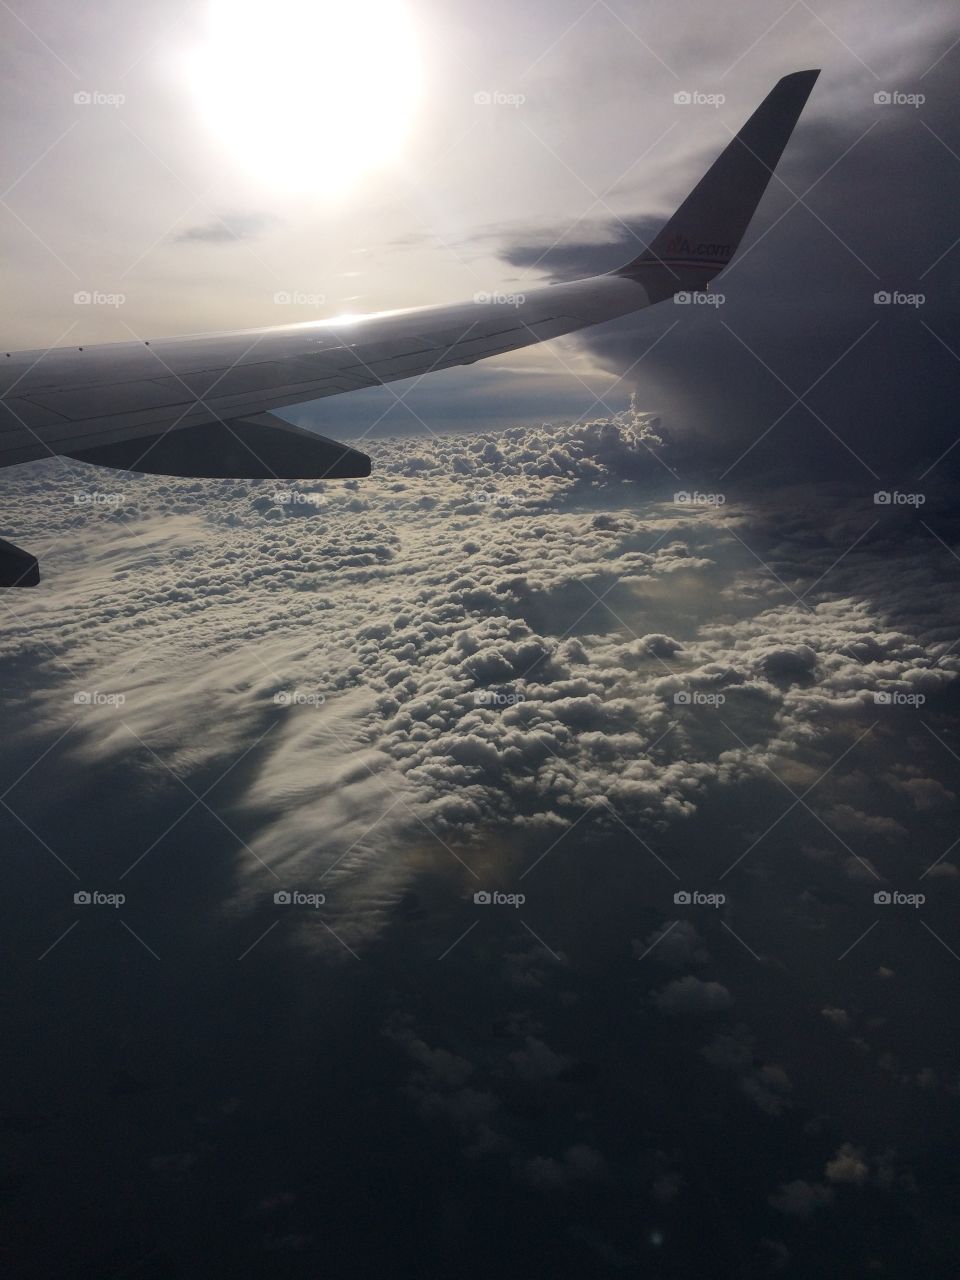 Plane window view 